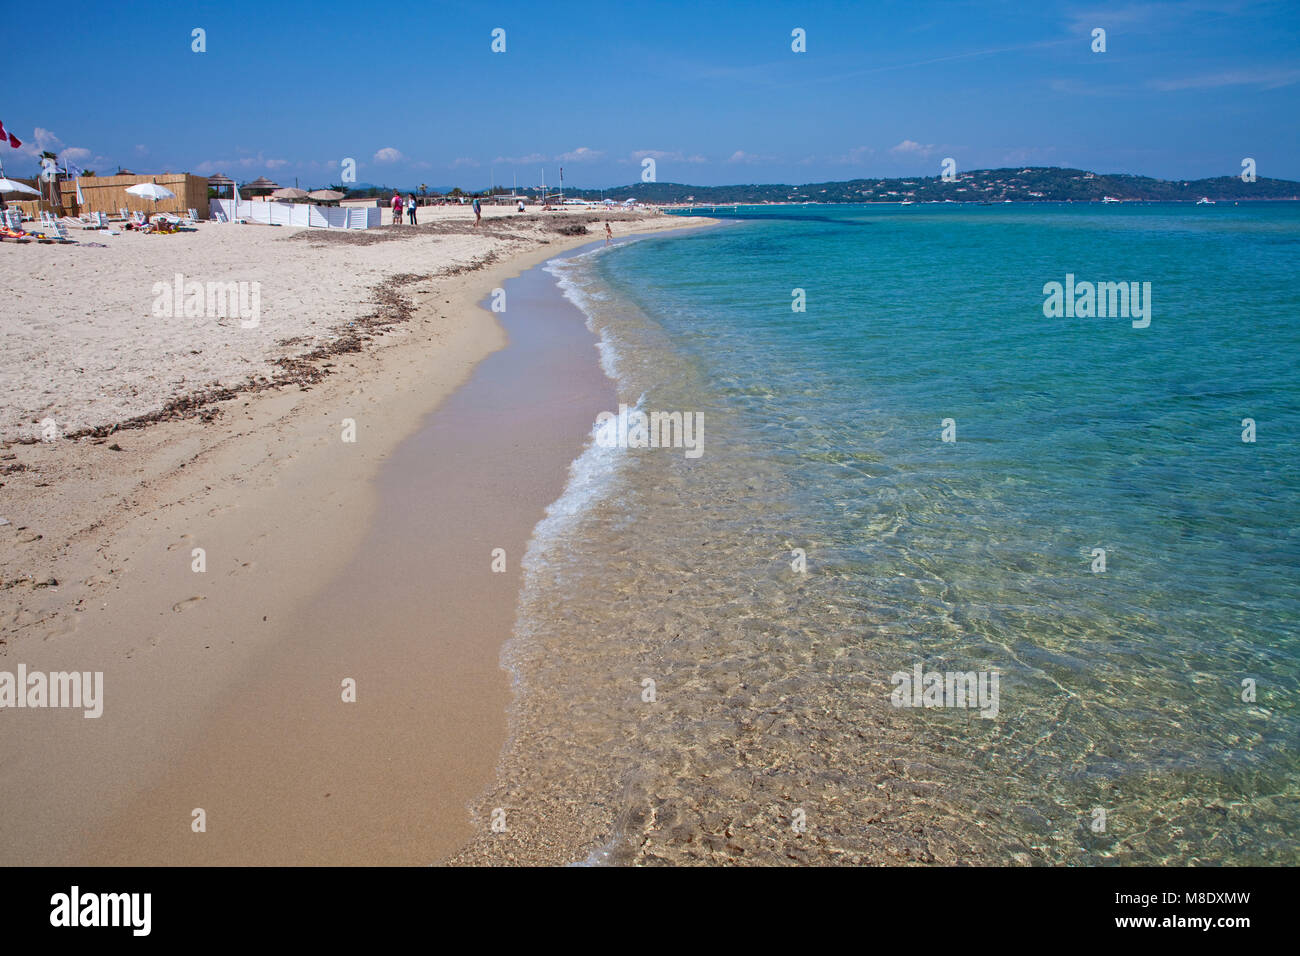 Pampelonne beach, popular beach at Saint-Tropez, french riviera, South France, Cote d'Azur, France, Europe, Mediterranean sea Stock Photo